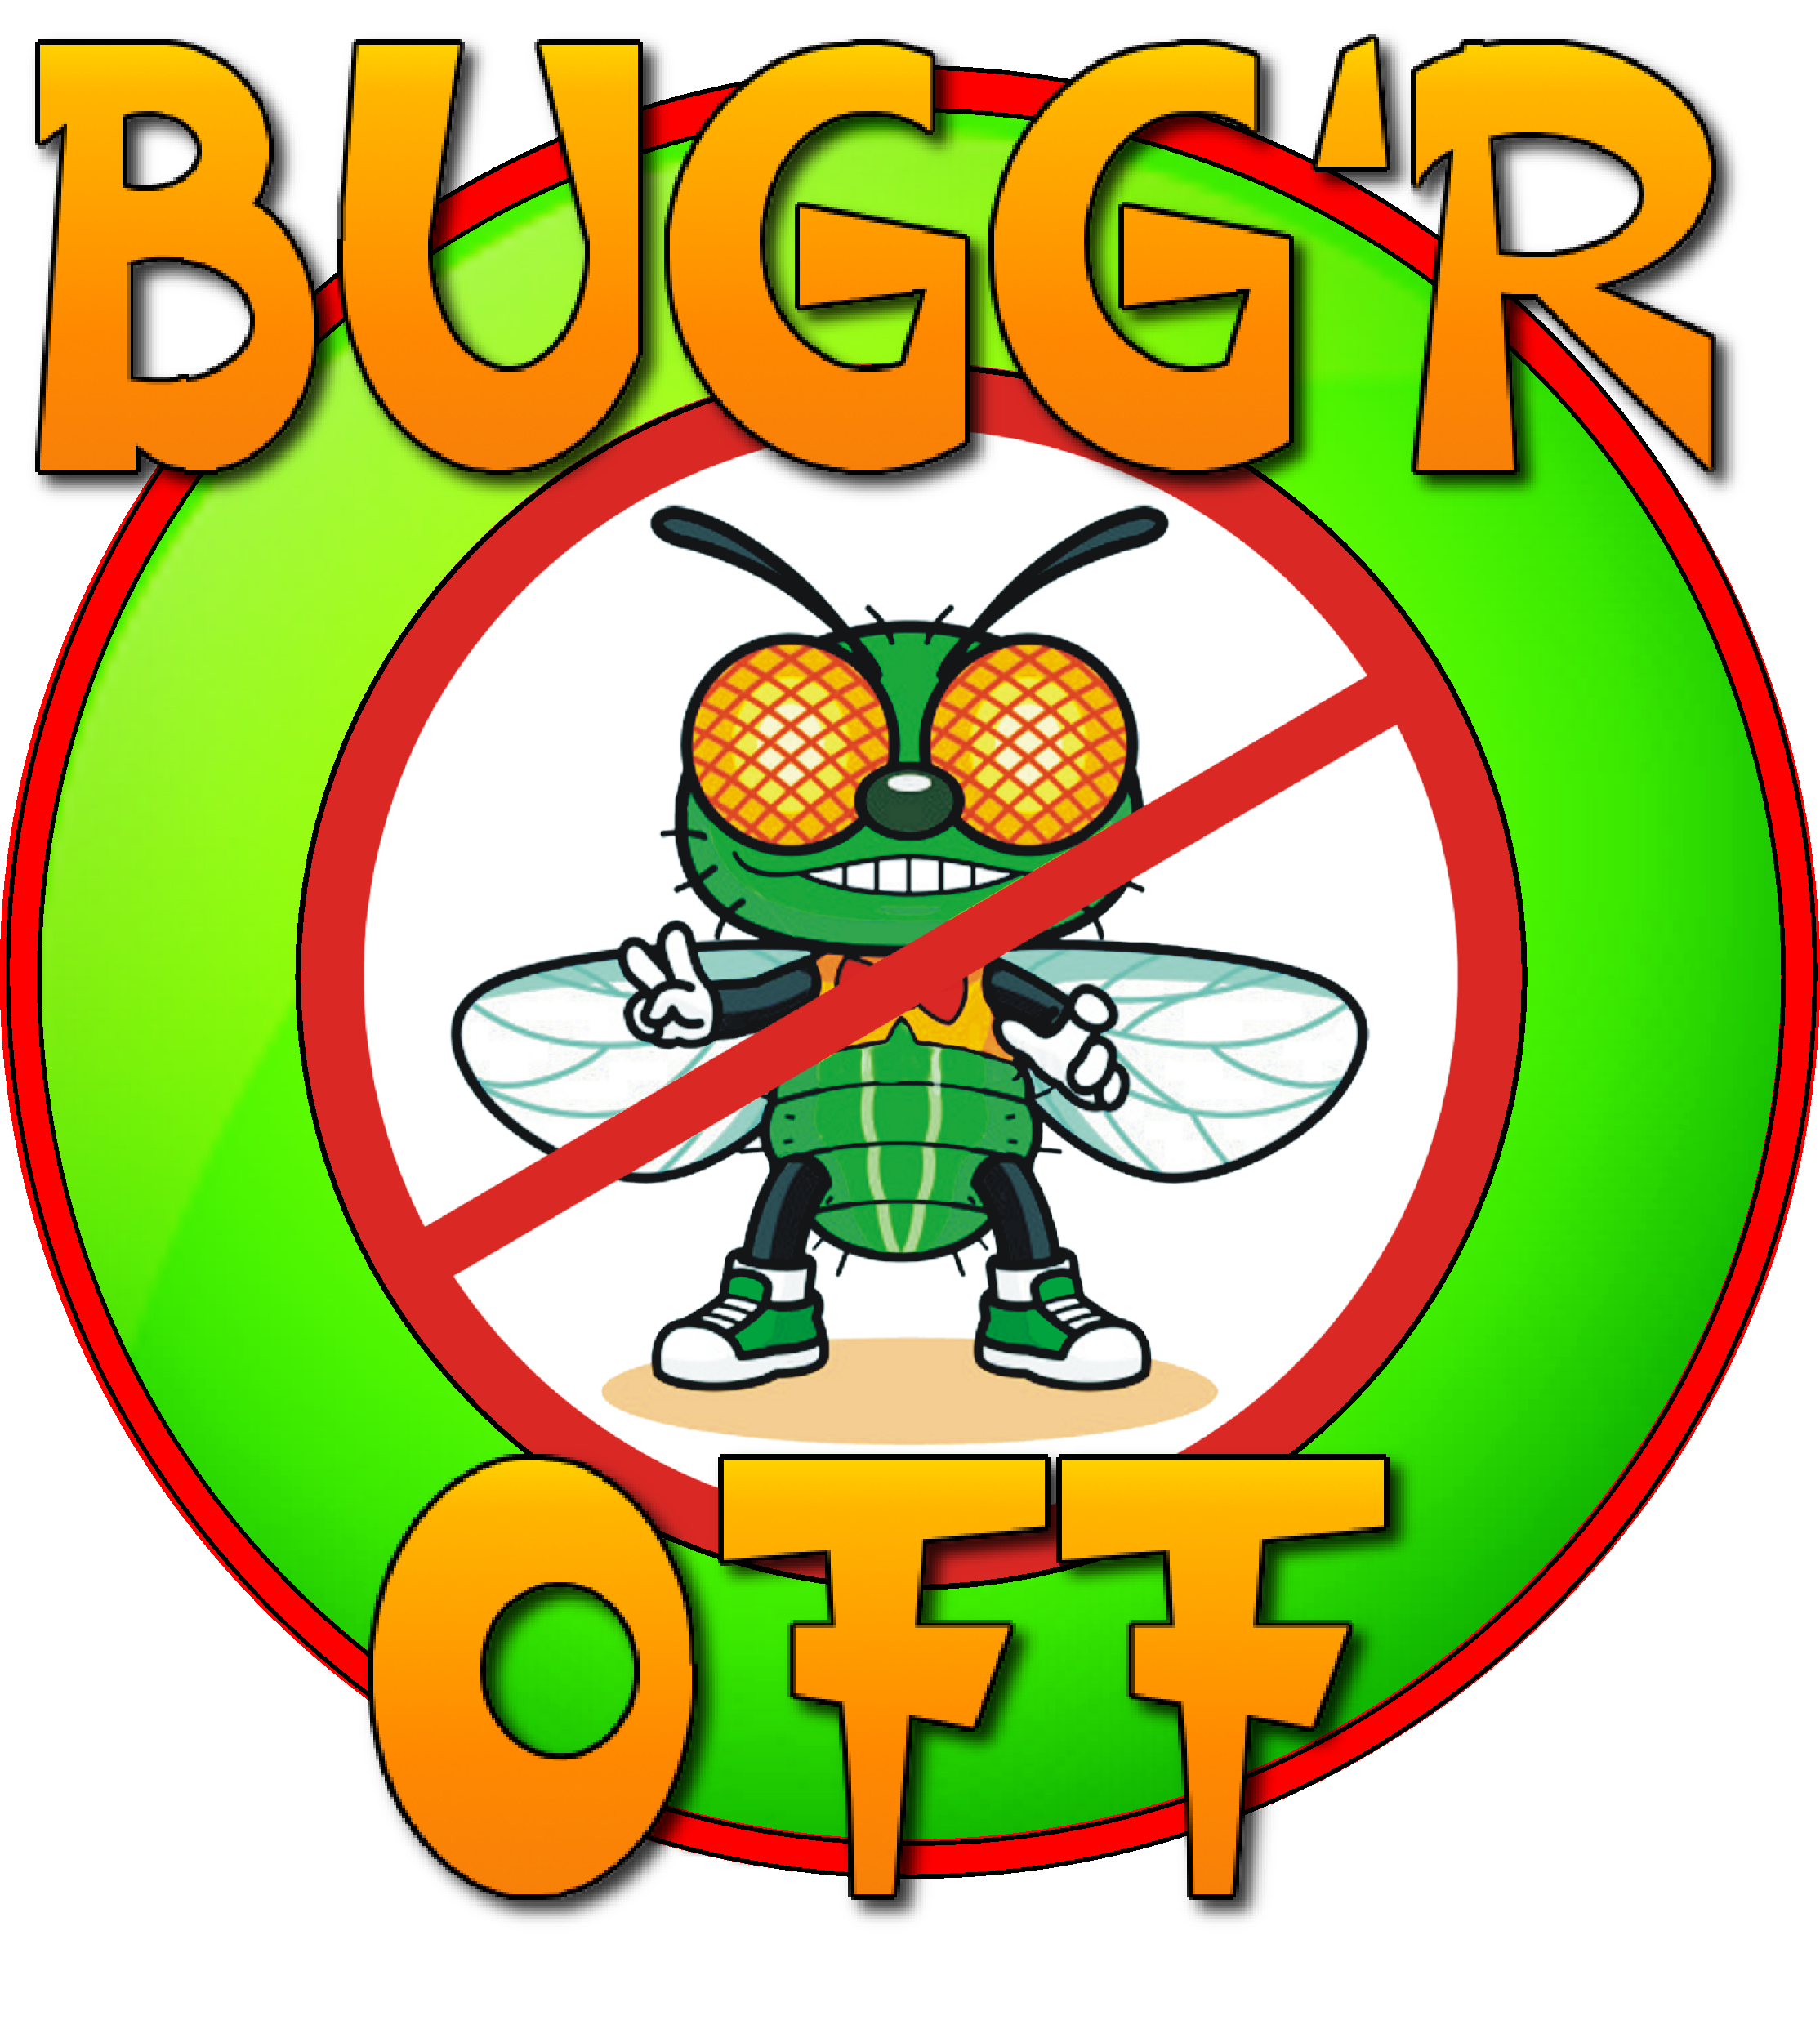 Bugg-R-Off logo